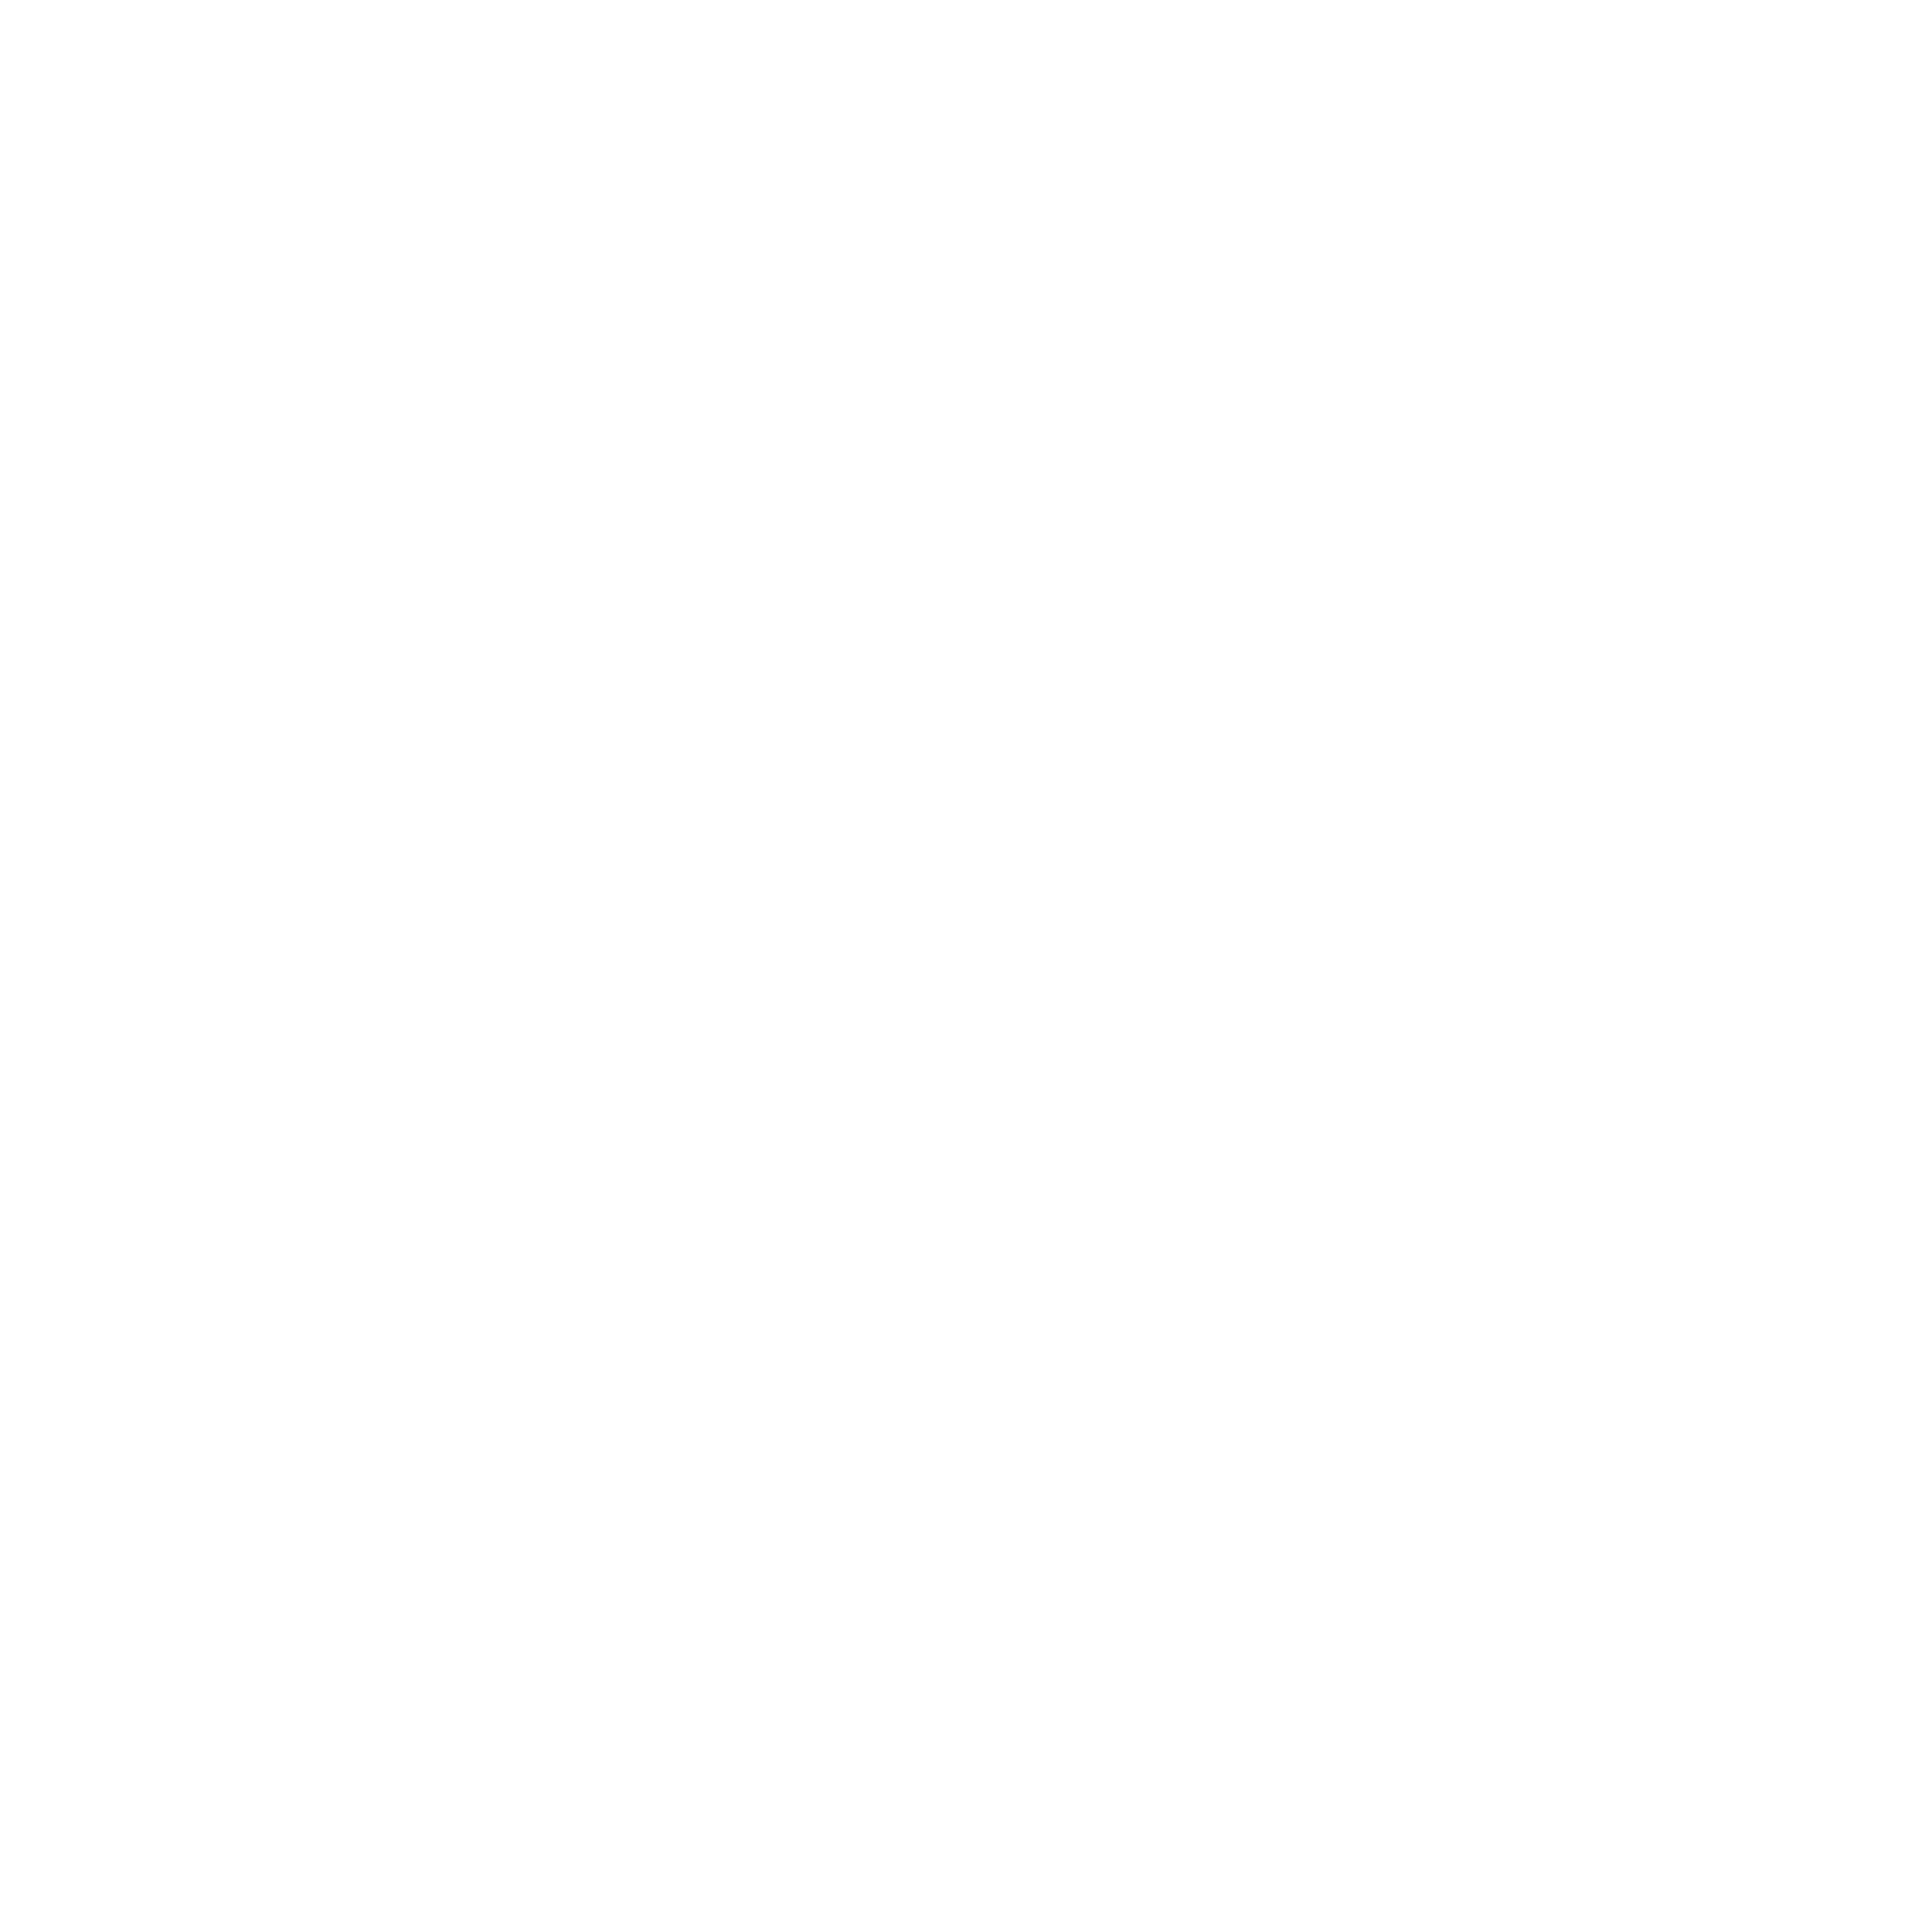 Merrell Logo - Merrell 45 Logo PNG Transparent & SVG Vector